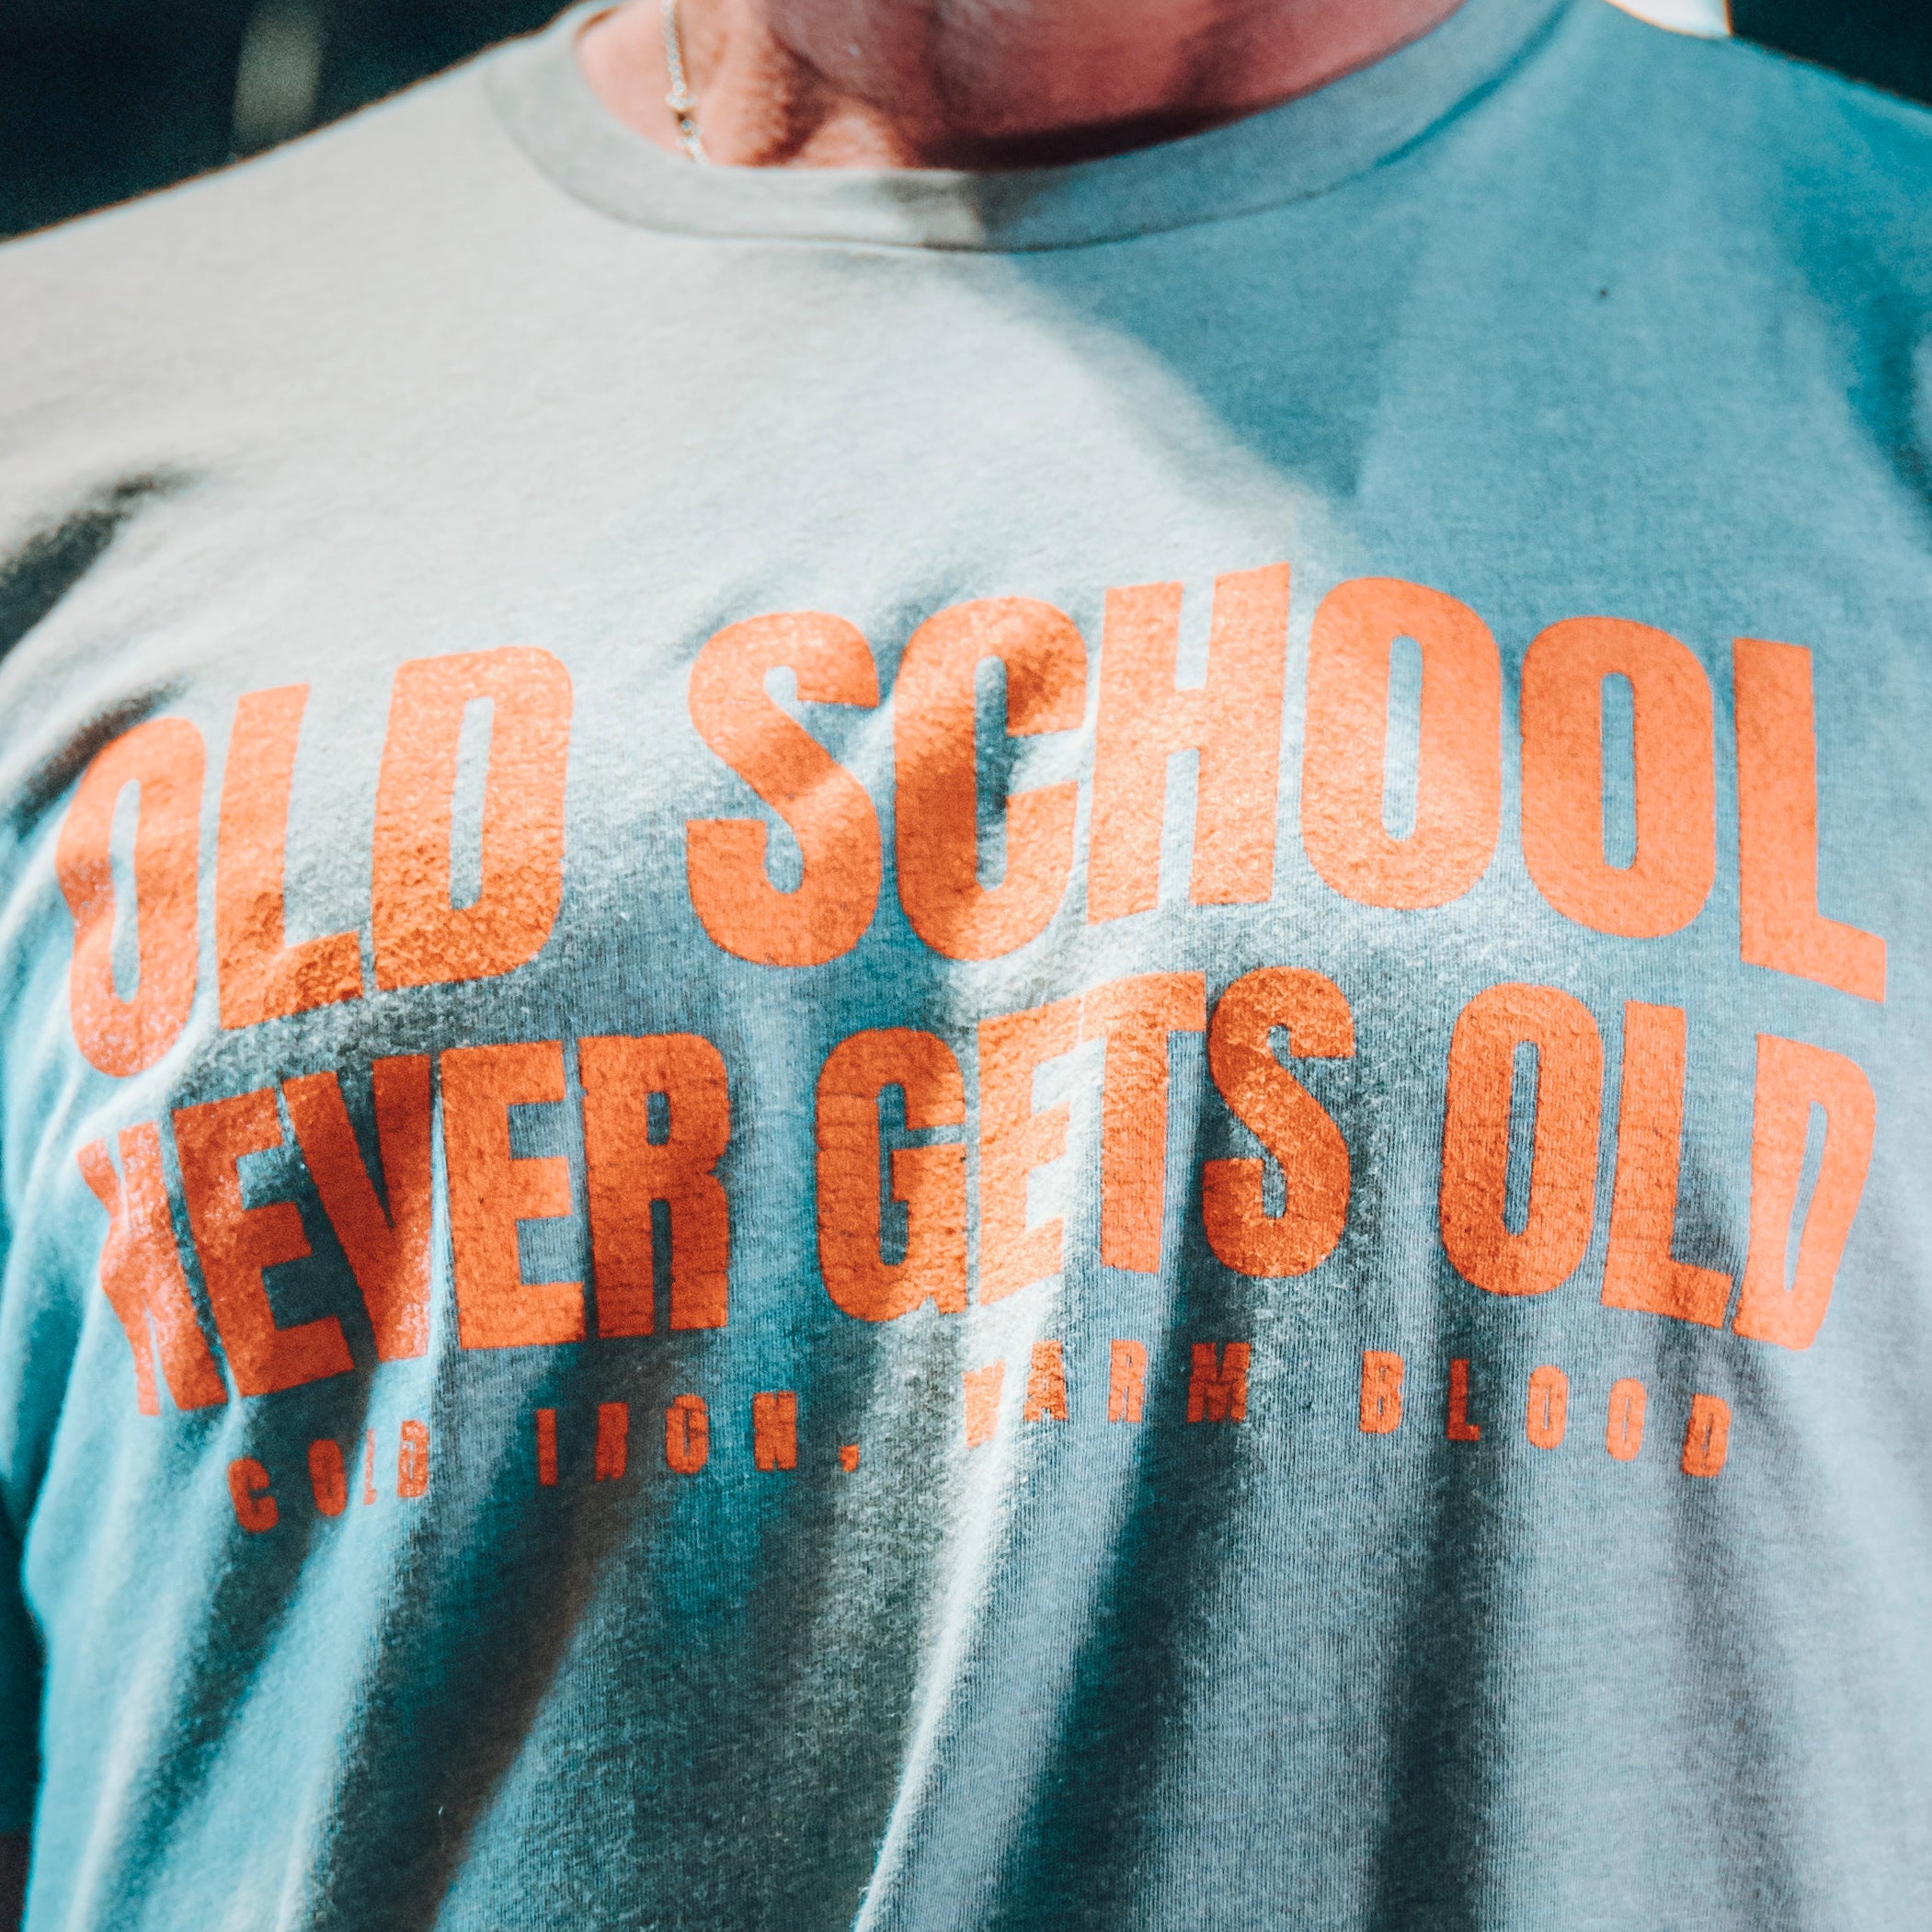 Old School Never Gets Old- Tee